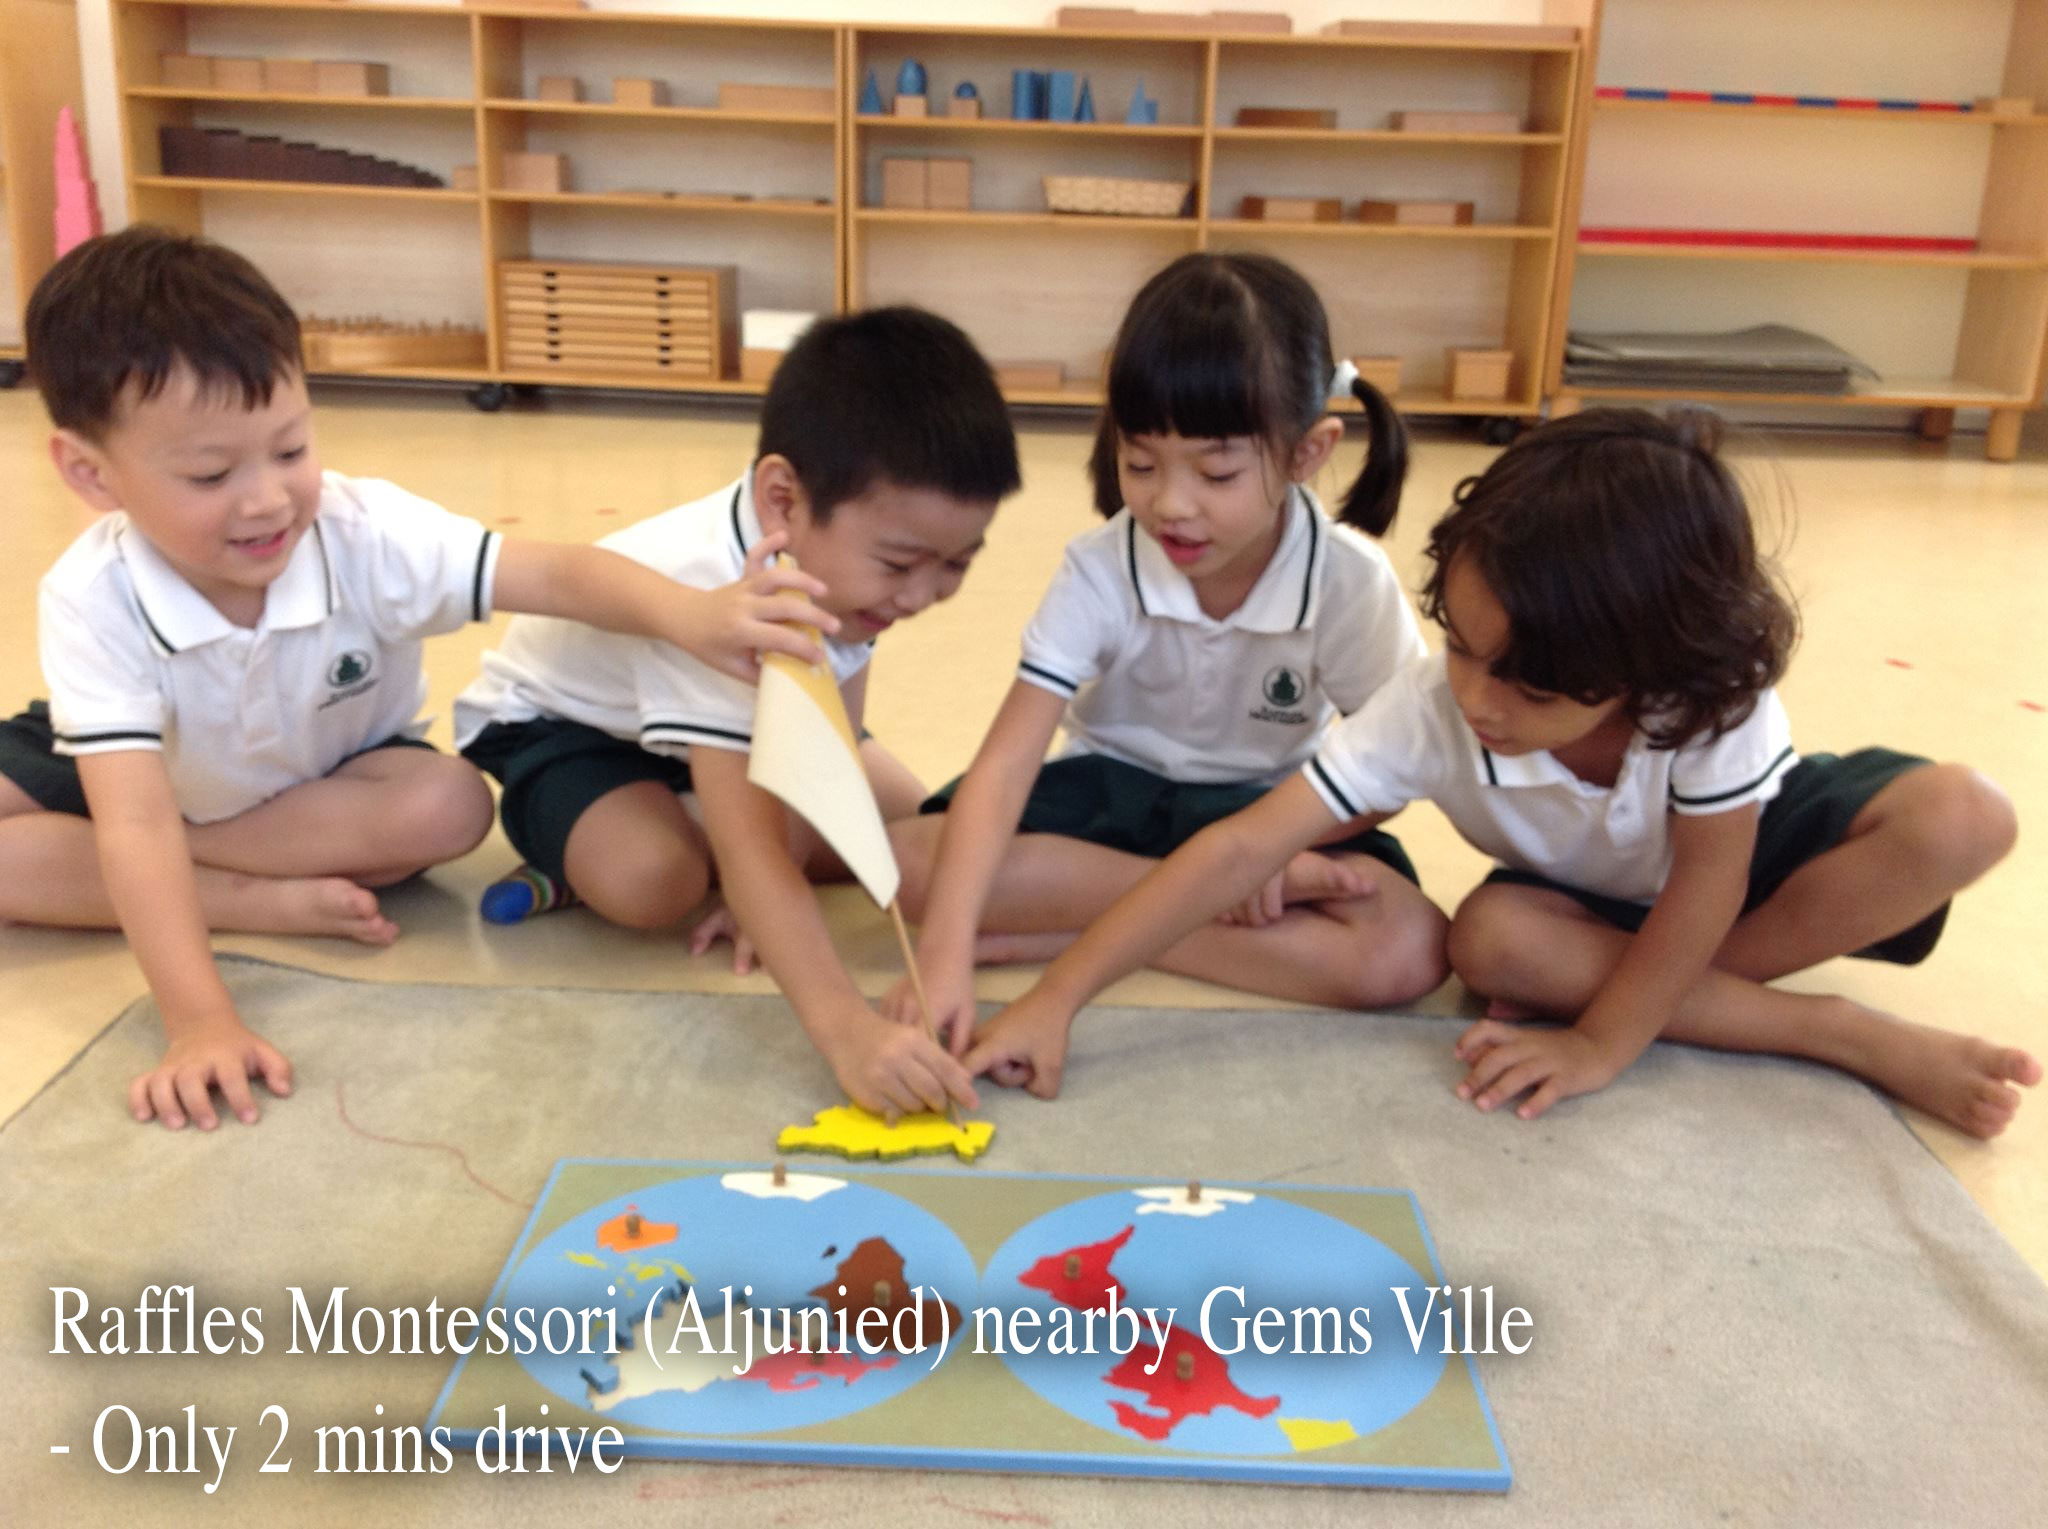 Raffles Montessori (Aljunied) nearby Gems Ville - Only 2 mins drive